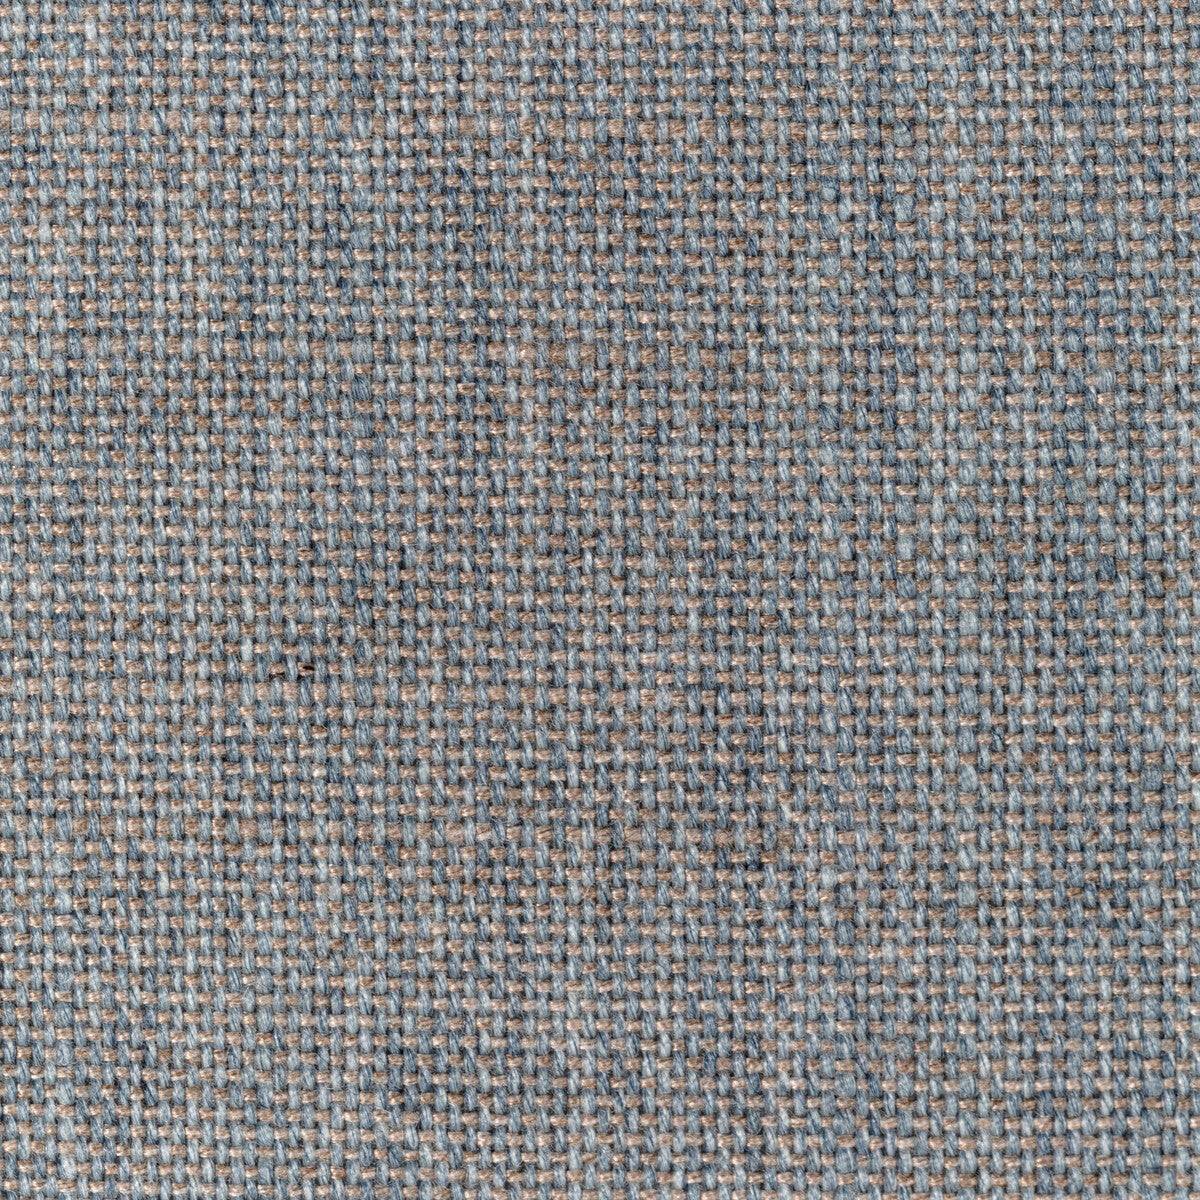 Kravet Smart fabric in 36112-121 color - pattern 36112.121.0 - by Kravet Smart in the Performance Kravetarmor collection